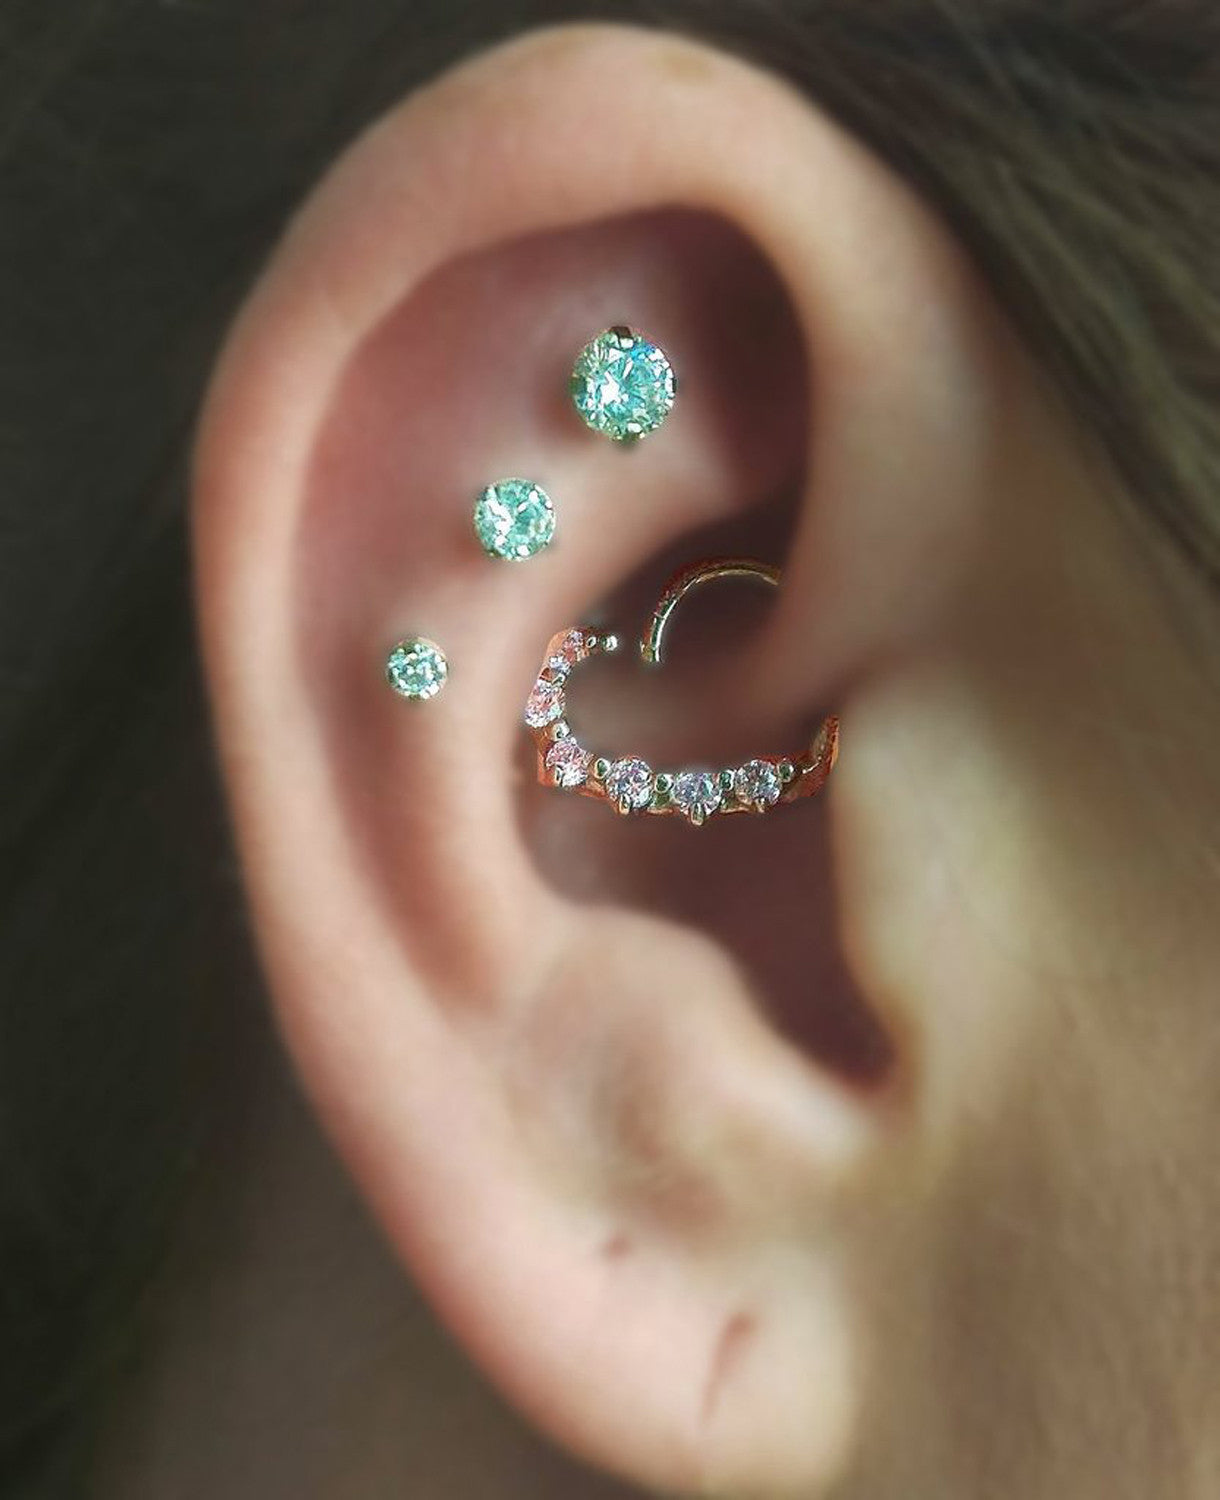 Cute Ear Piercing Ideas at MyBodiArt.com - Constellation Piercing - Heart Rook Earring Hoop - Helix Cartilage Earring Studs - MyBodiArt.com